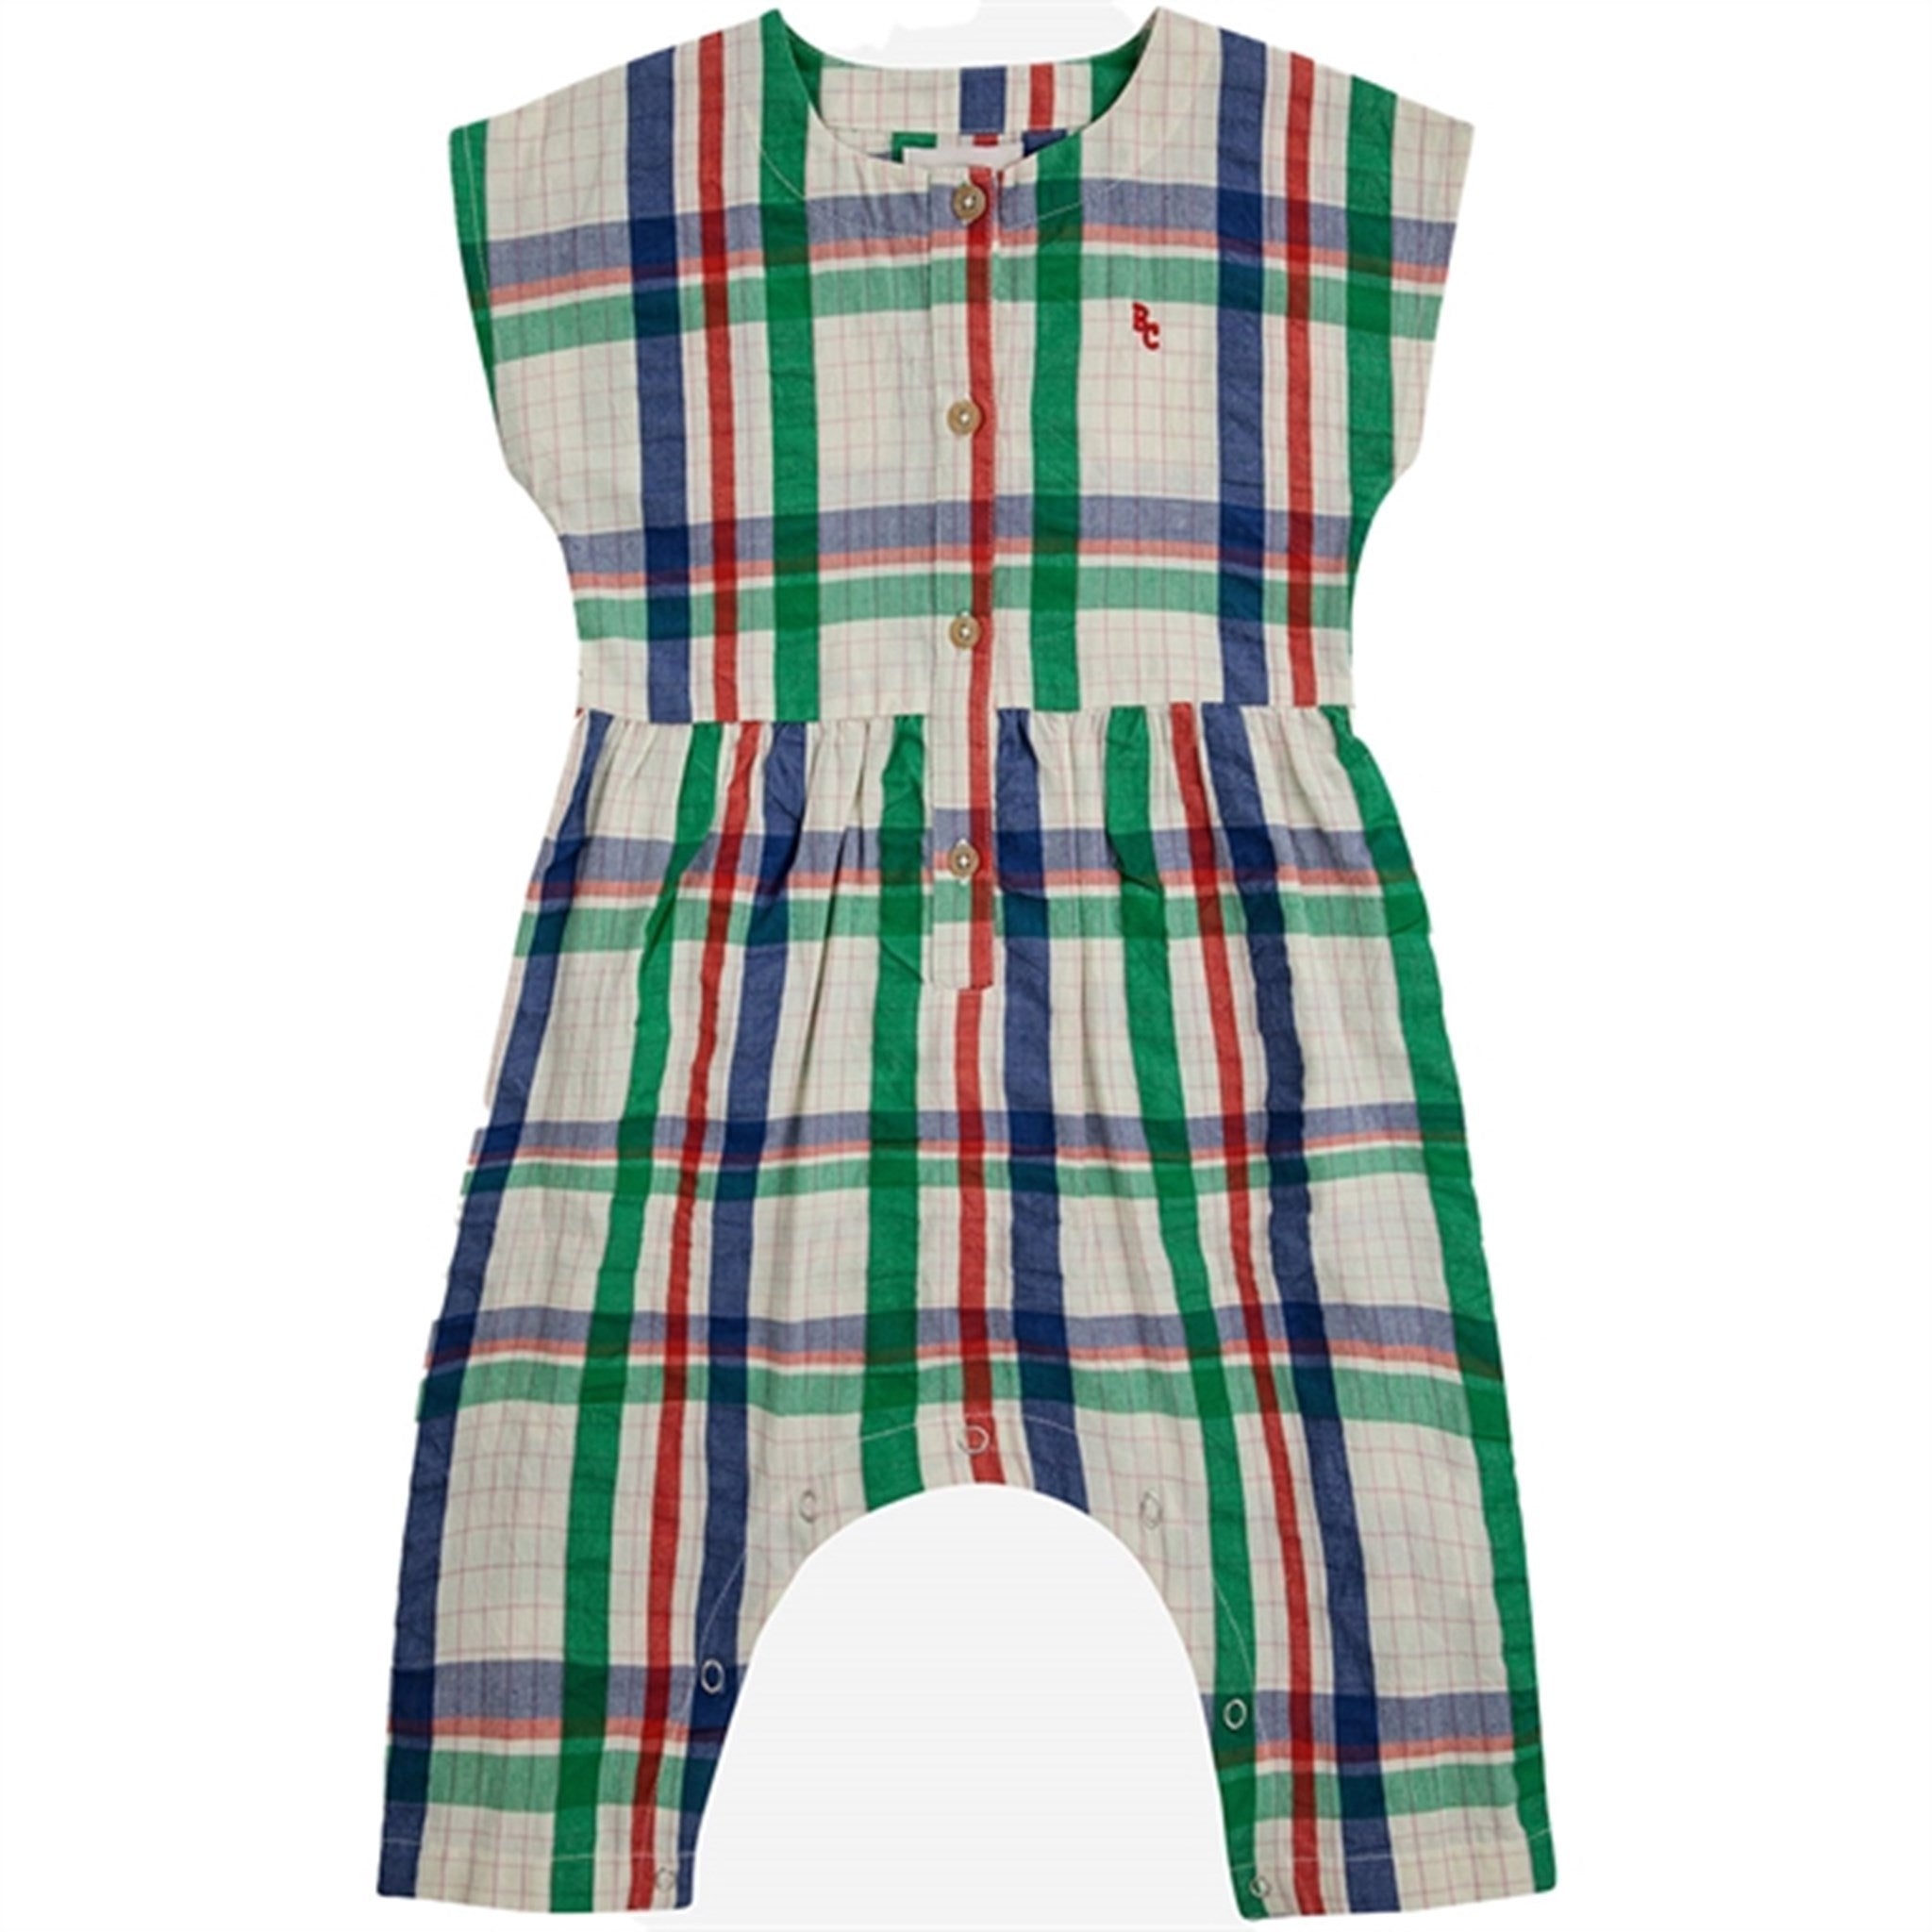 Bobo Choses Baby Madras Checks Woven Overall Short Sleeve Multicolor